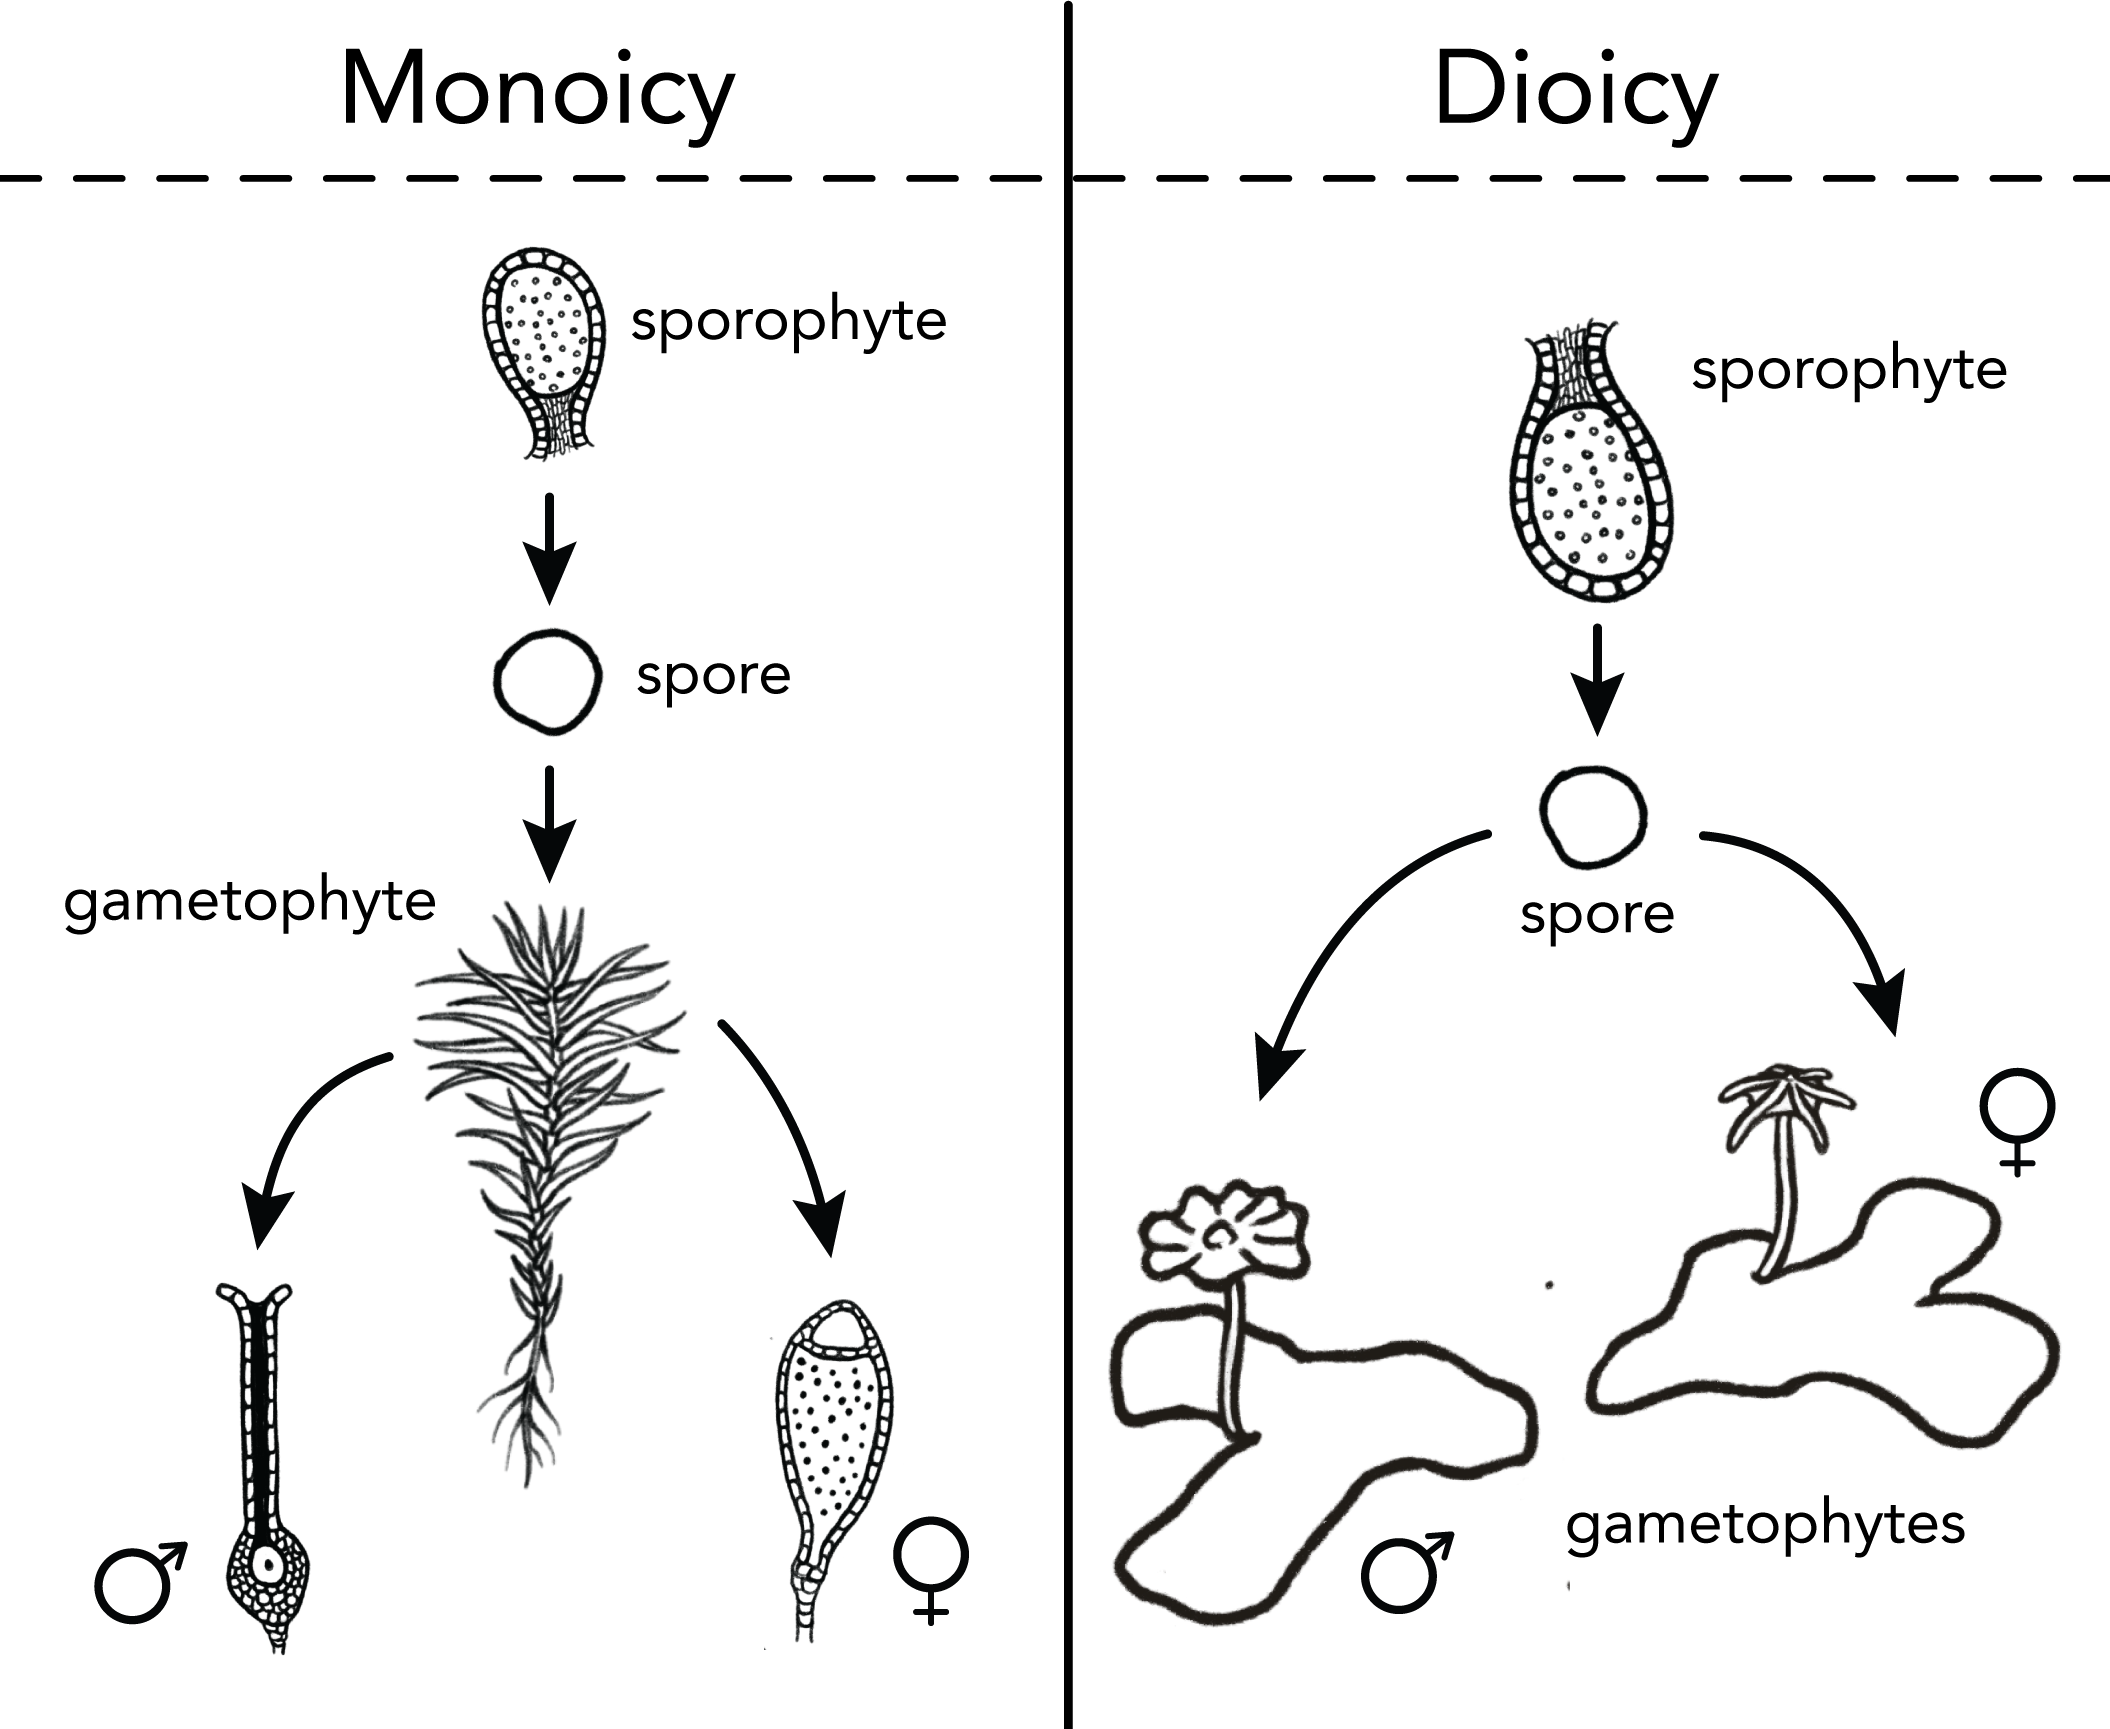 monoicy vs. dioicy